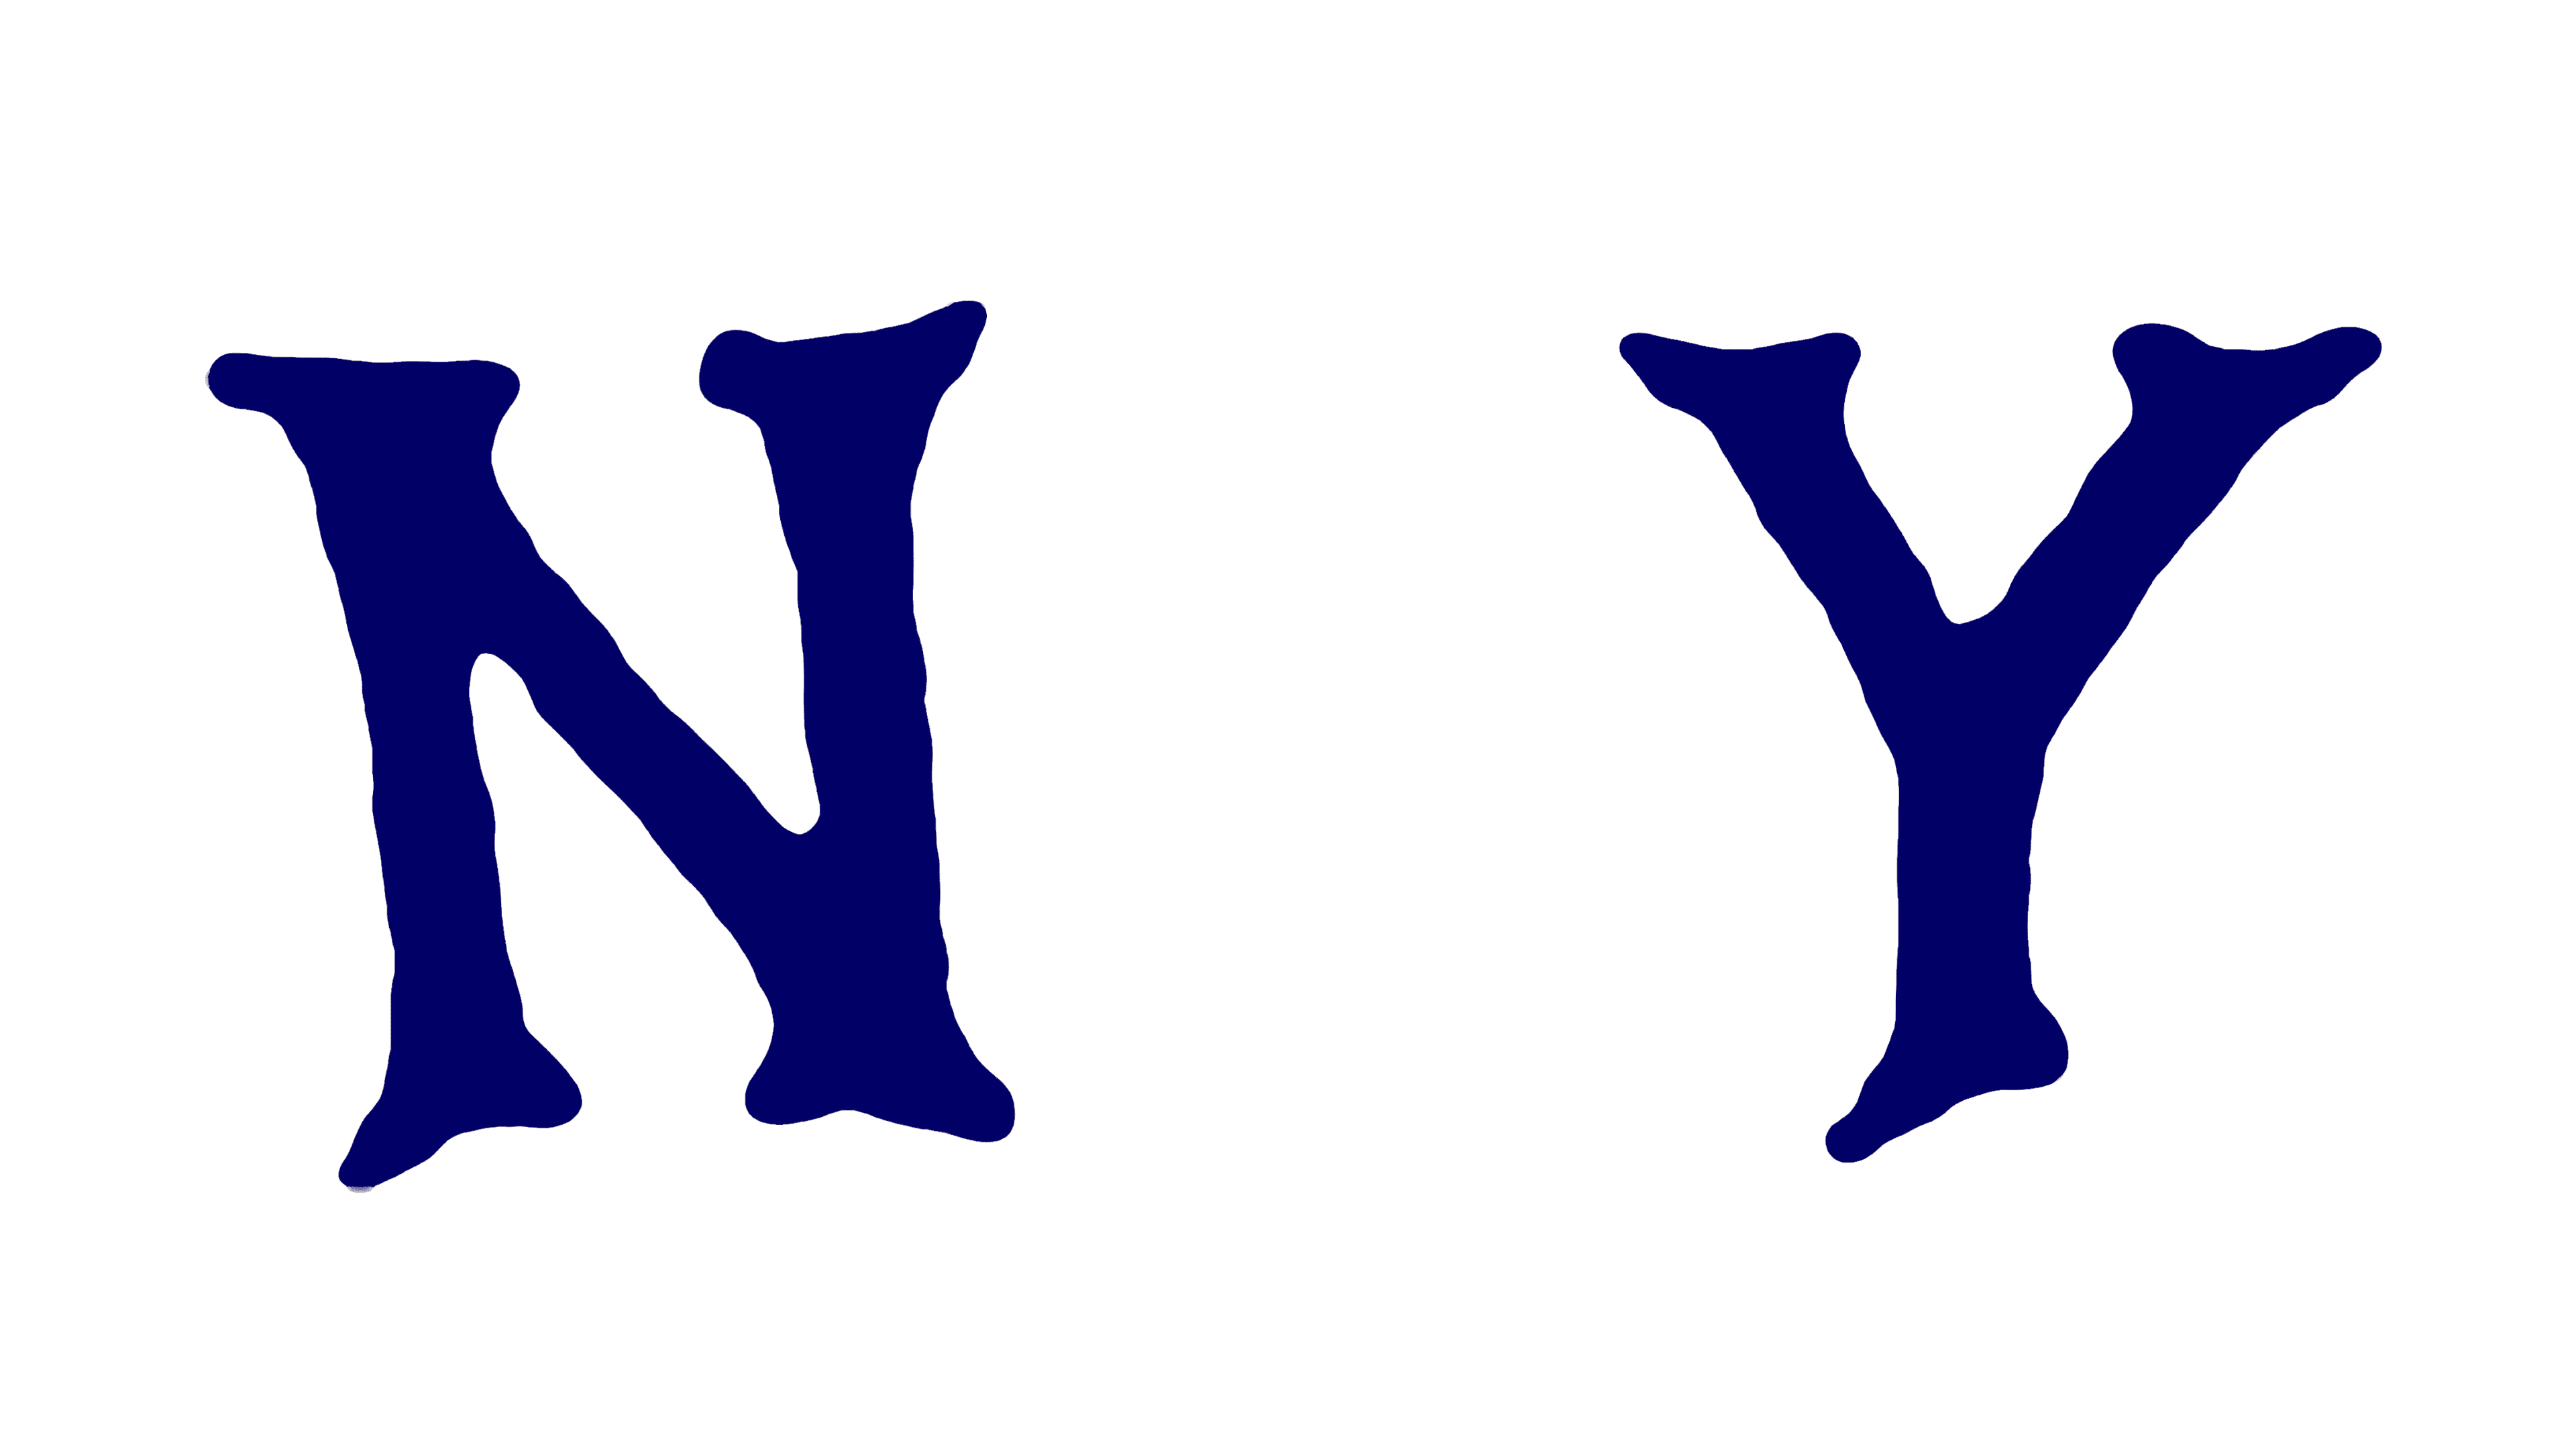 Yankees Emoji Copy And Paste